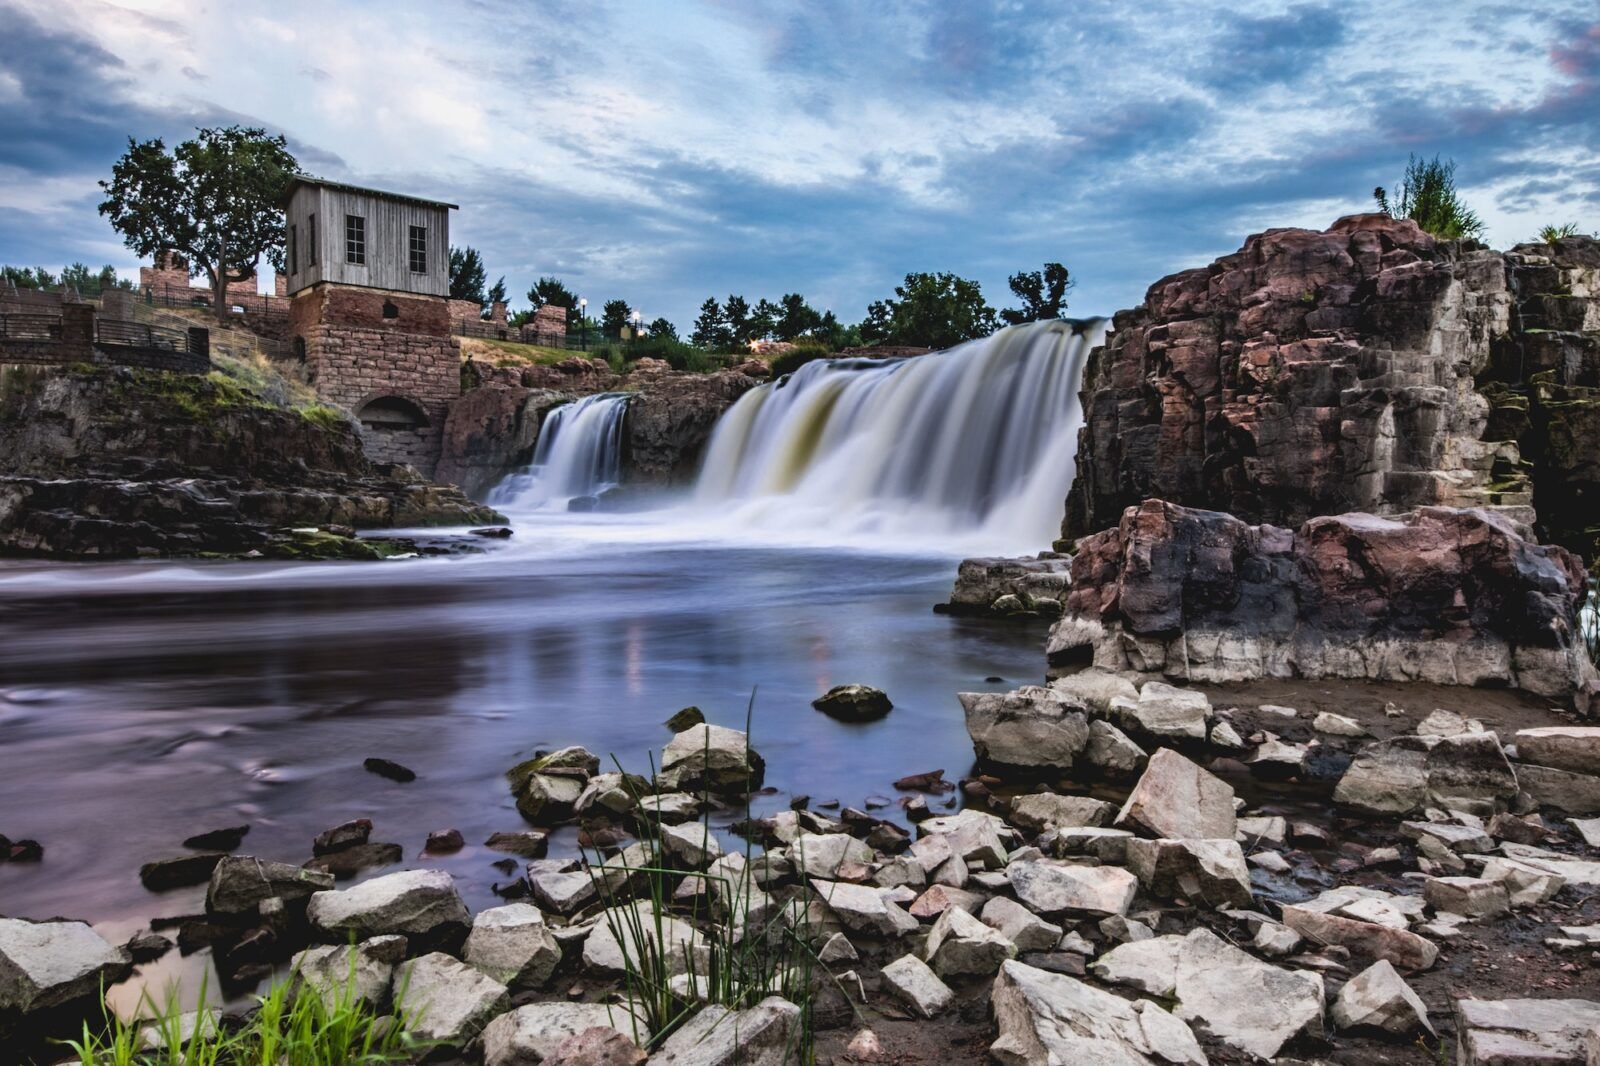 View of the beautiful Falls Park at Sioux Falls, South Dakota